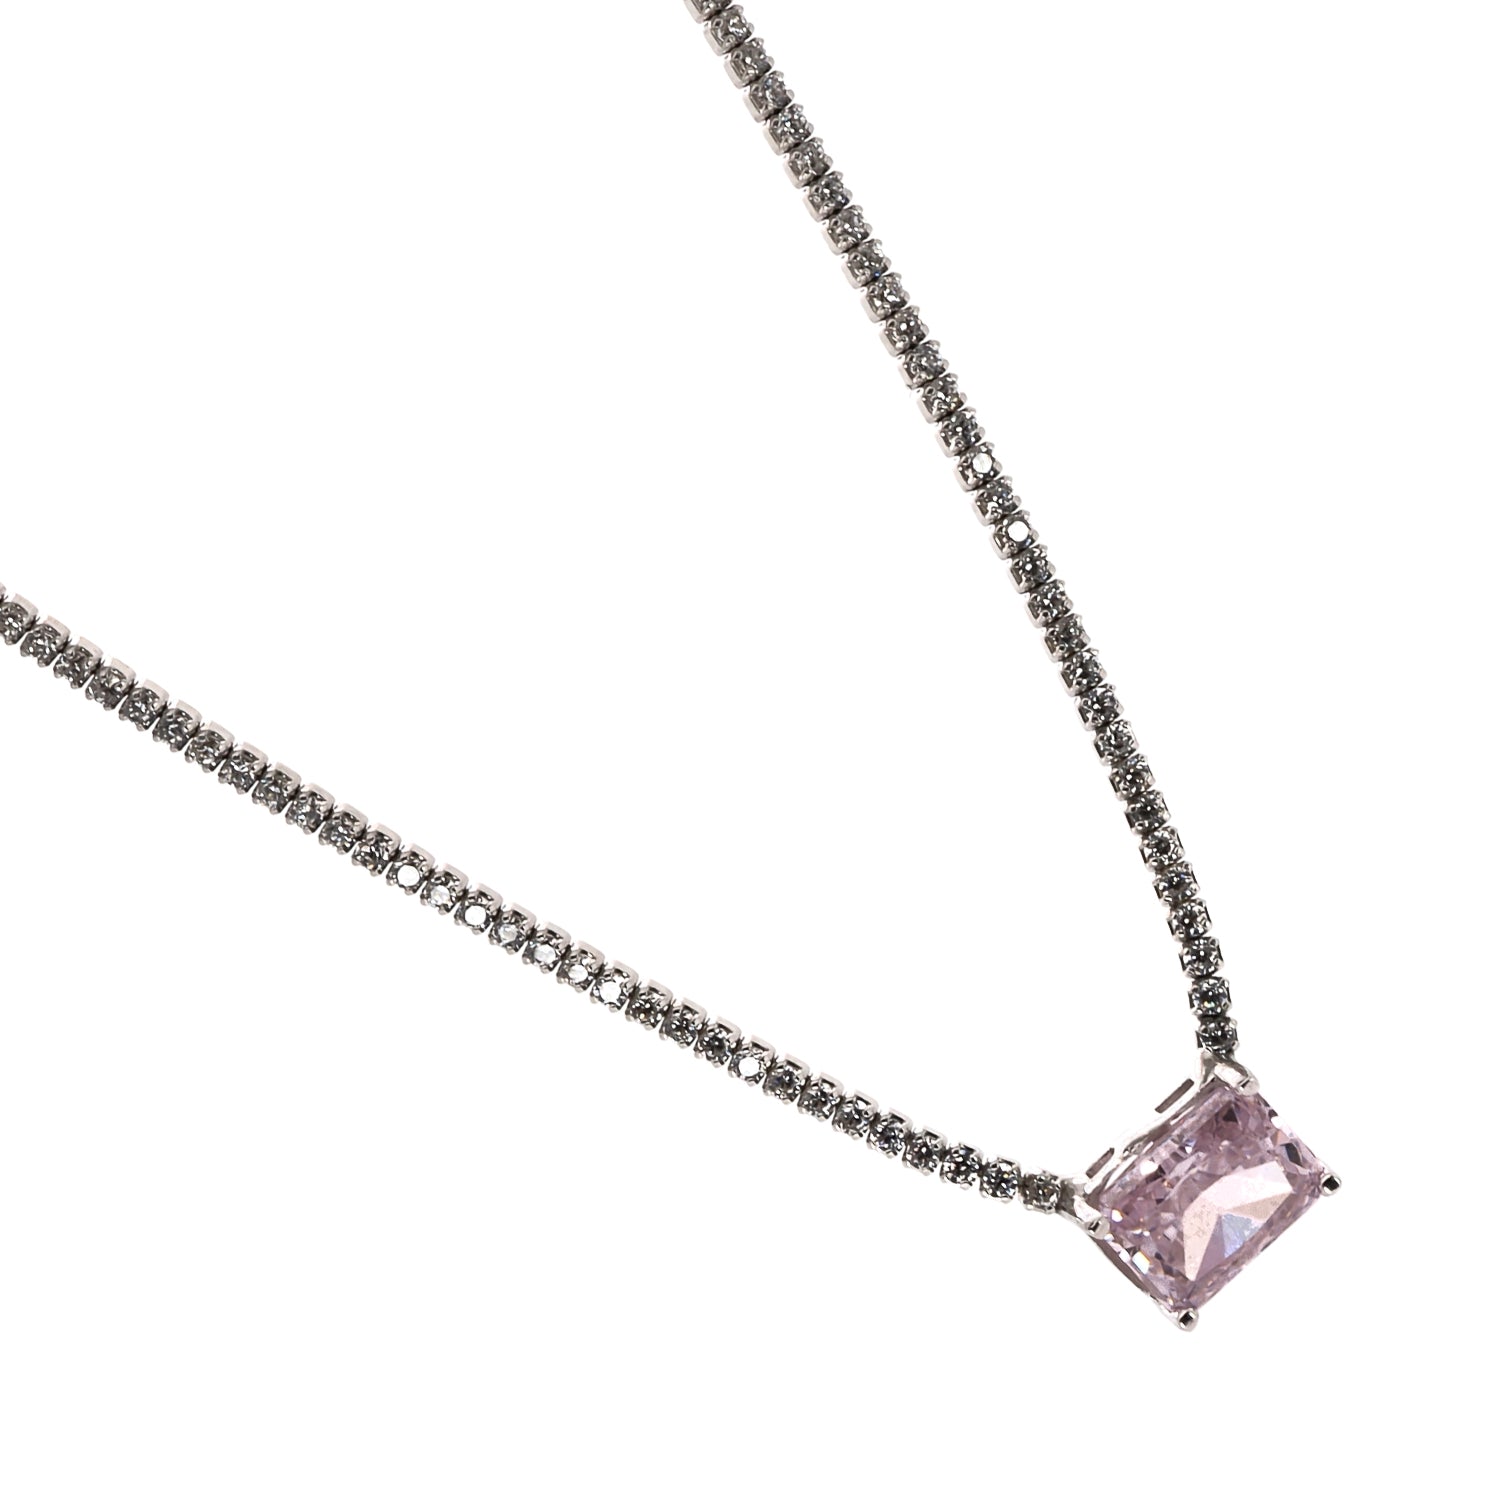 Handmade Elegance: Sterling Silver Necklace with Pink Quartz Pendant